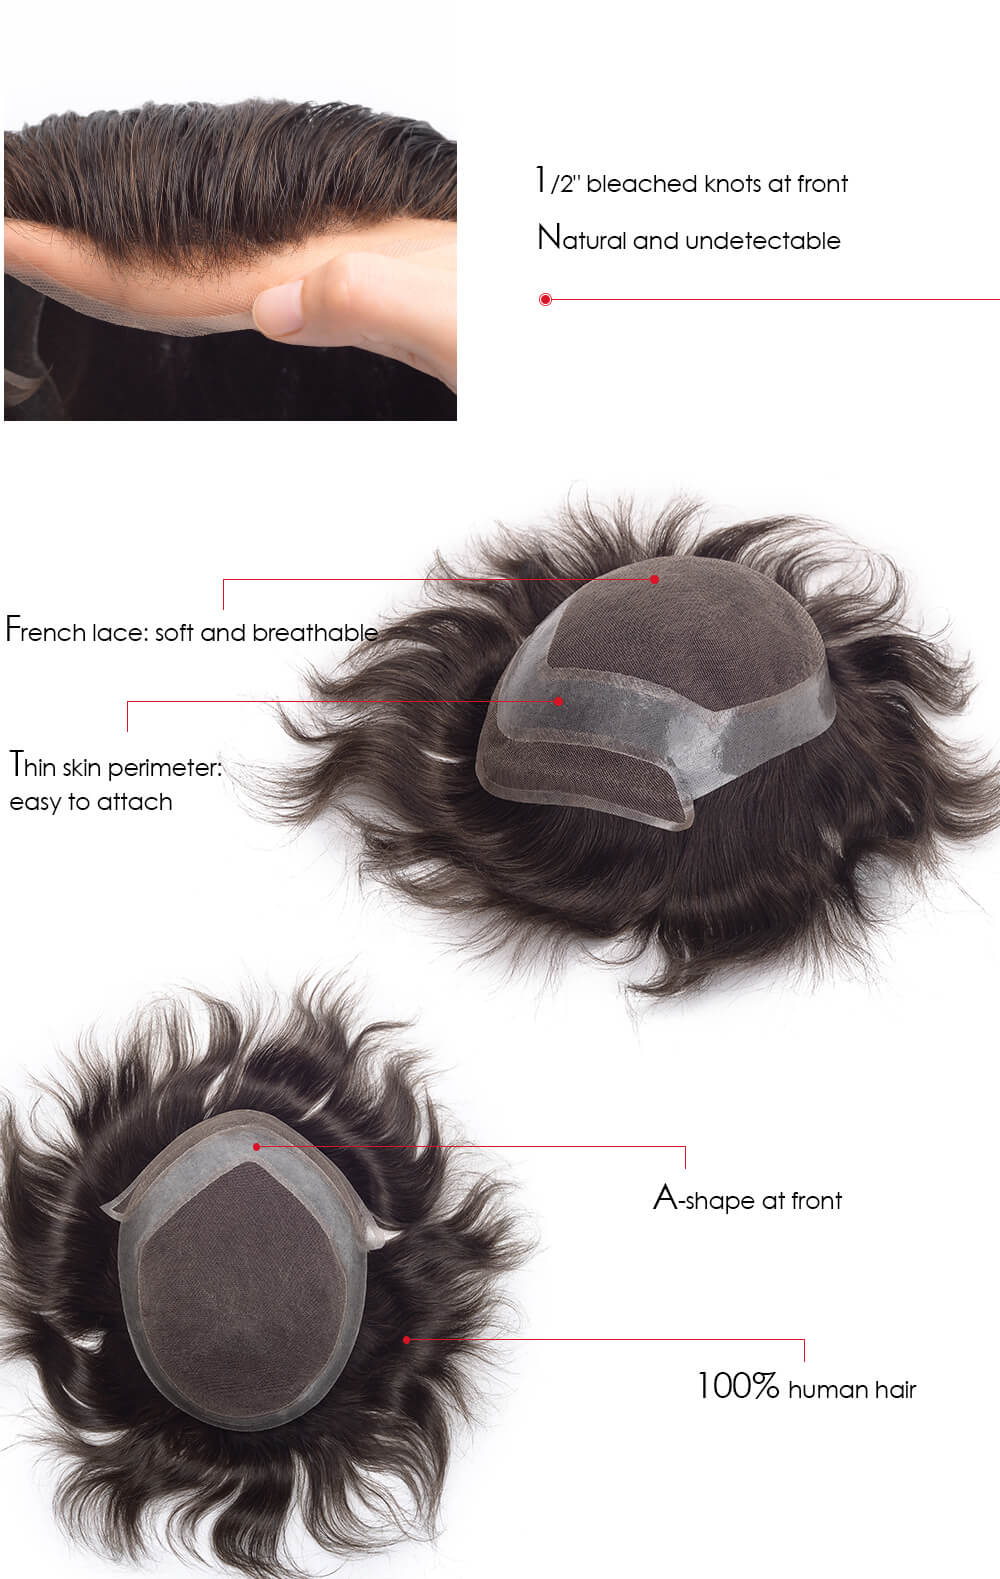 Hair systems for men